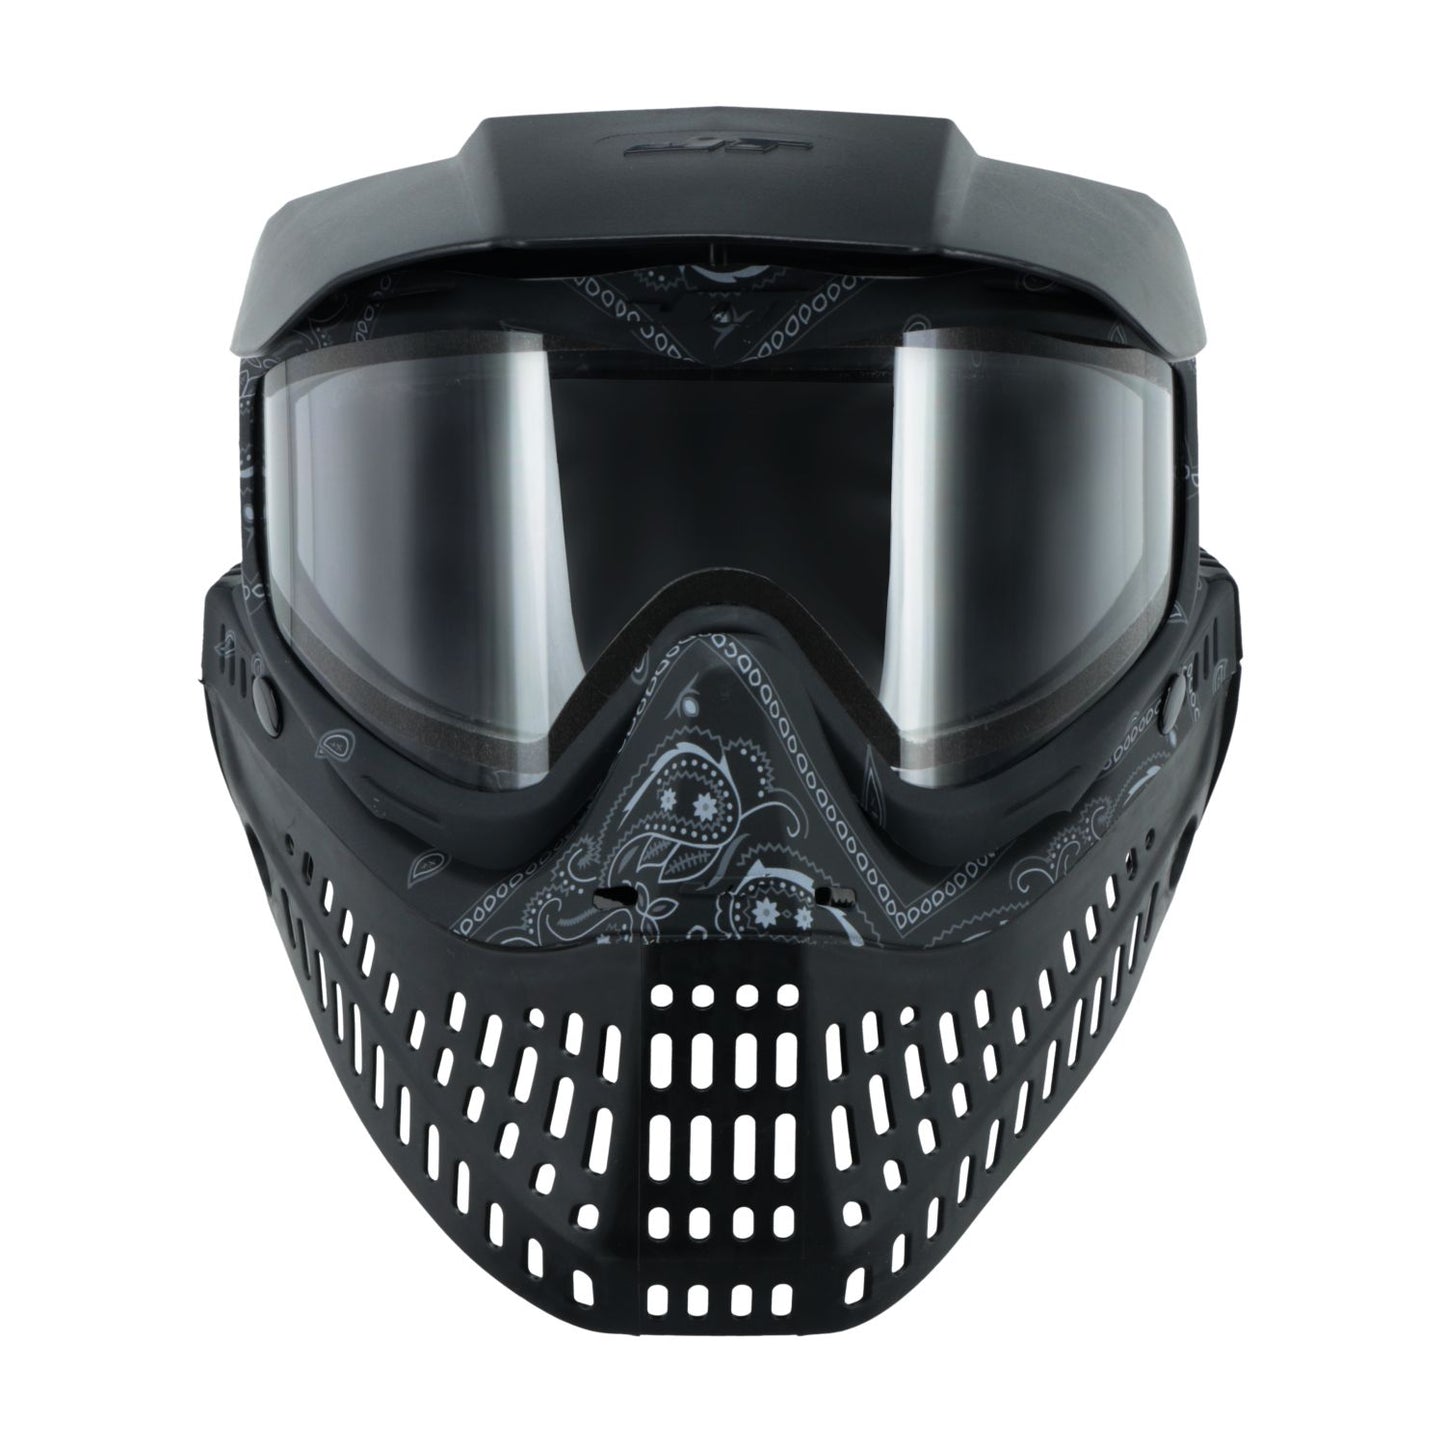 JT Bandana Series Proflex Paintball Mask - Black w/ Clear and Smoke Thermal Lens